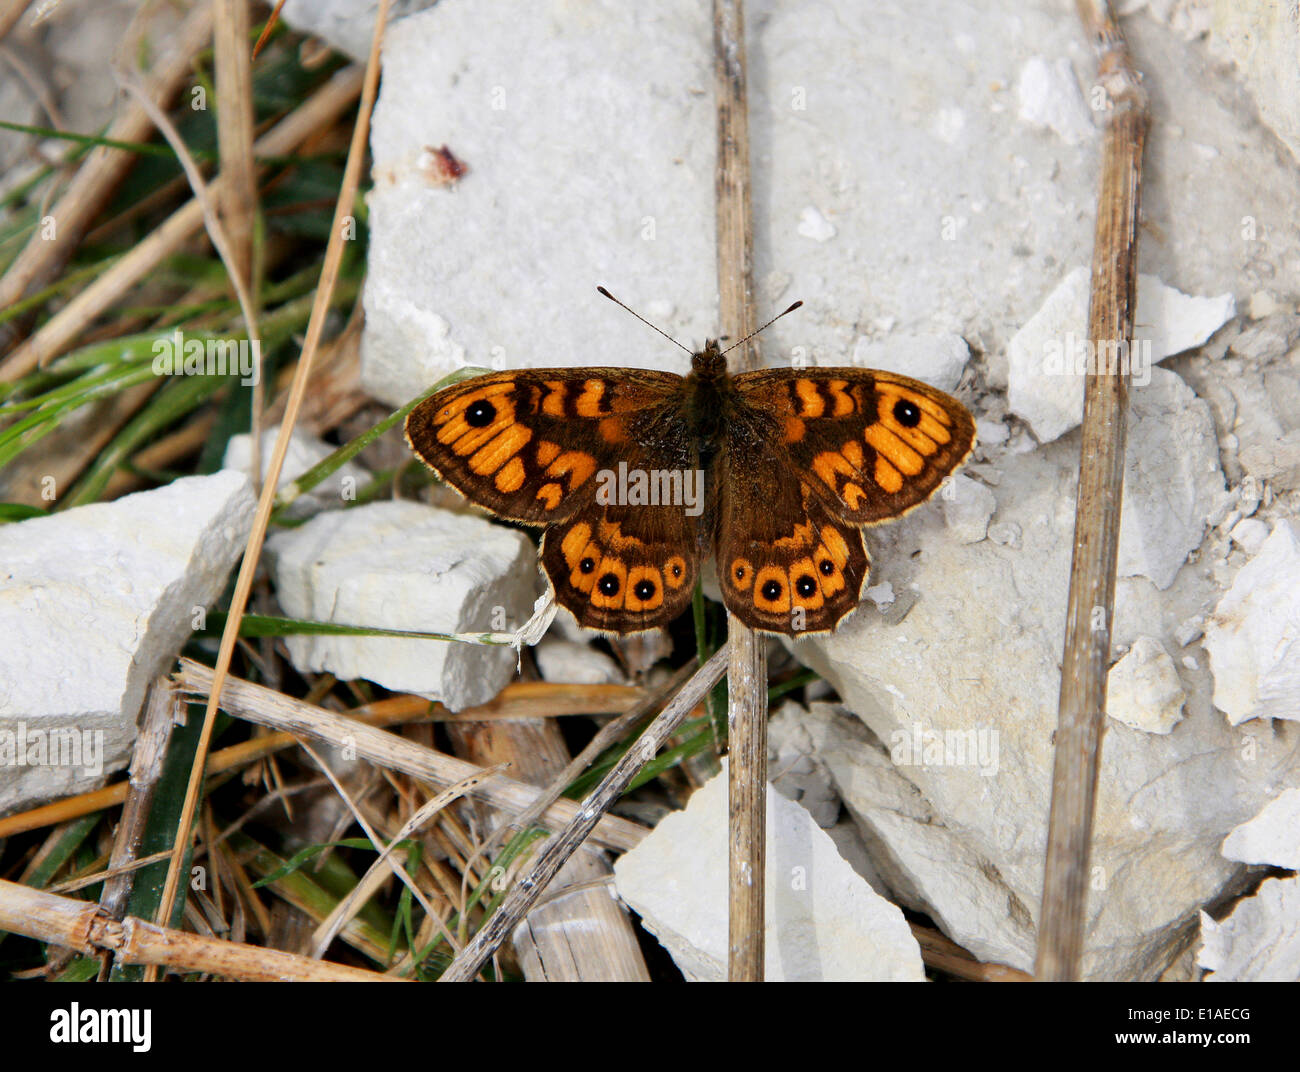 Wall Brown Butterfly, Lasiommata megera (Pararge megaera), Satyrinae, Nymphalidae, Papilionoidea. Male. Stock Photo